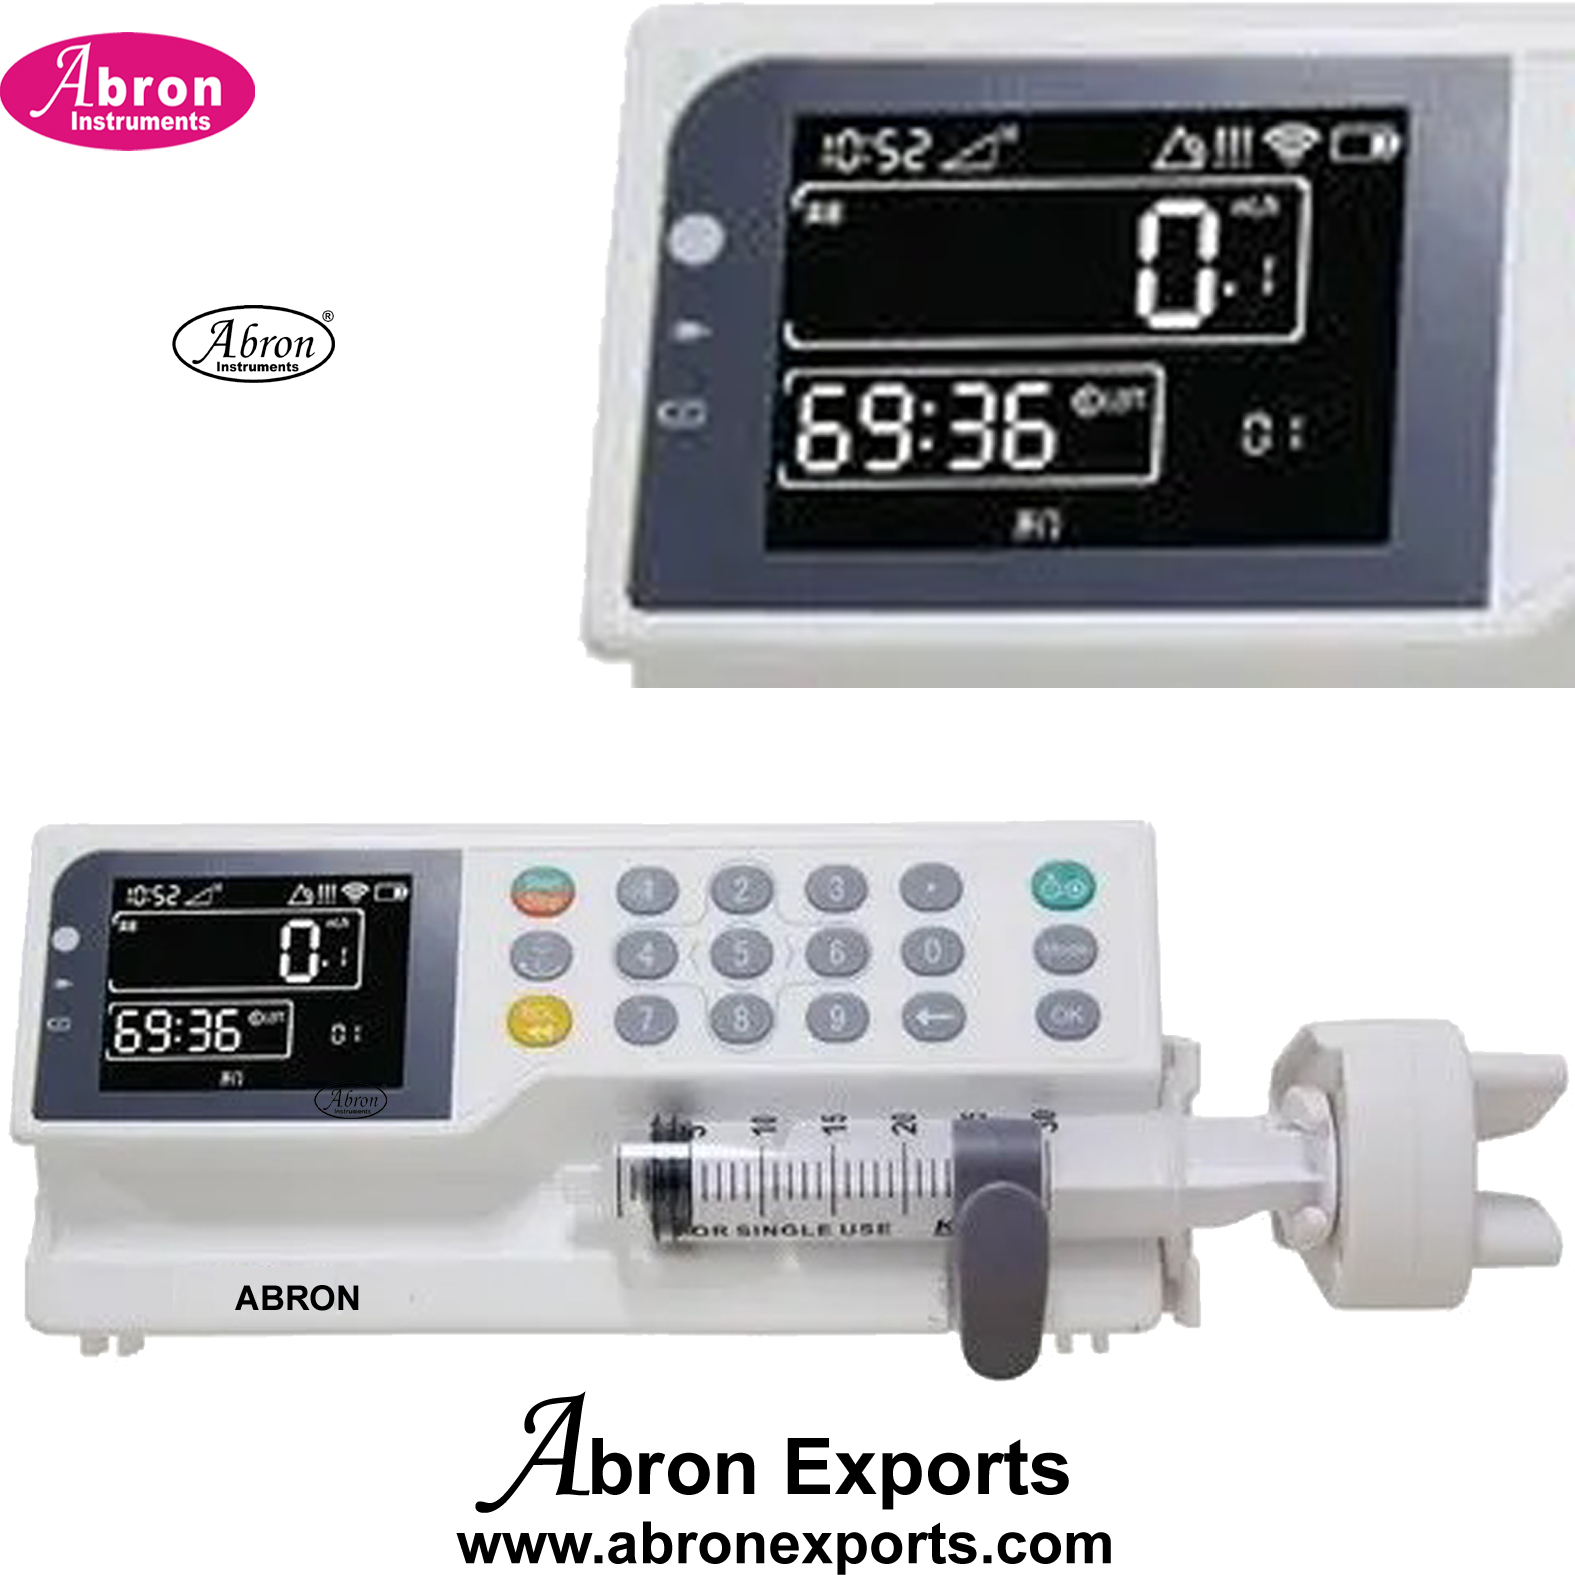 Syringe Infusion Pump Digital Cap 0-60ml Slowly Controlled Hospital ICU Medical Abron AMB-2602K50 